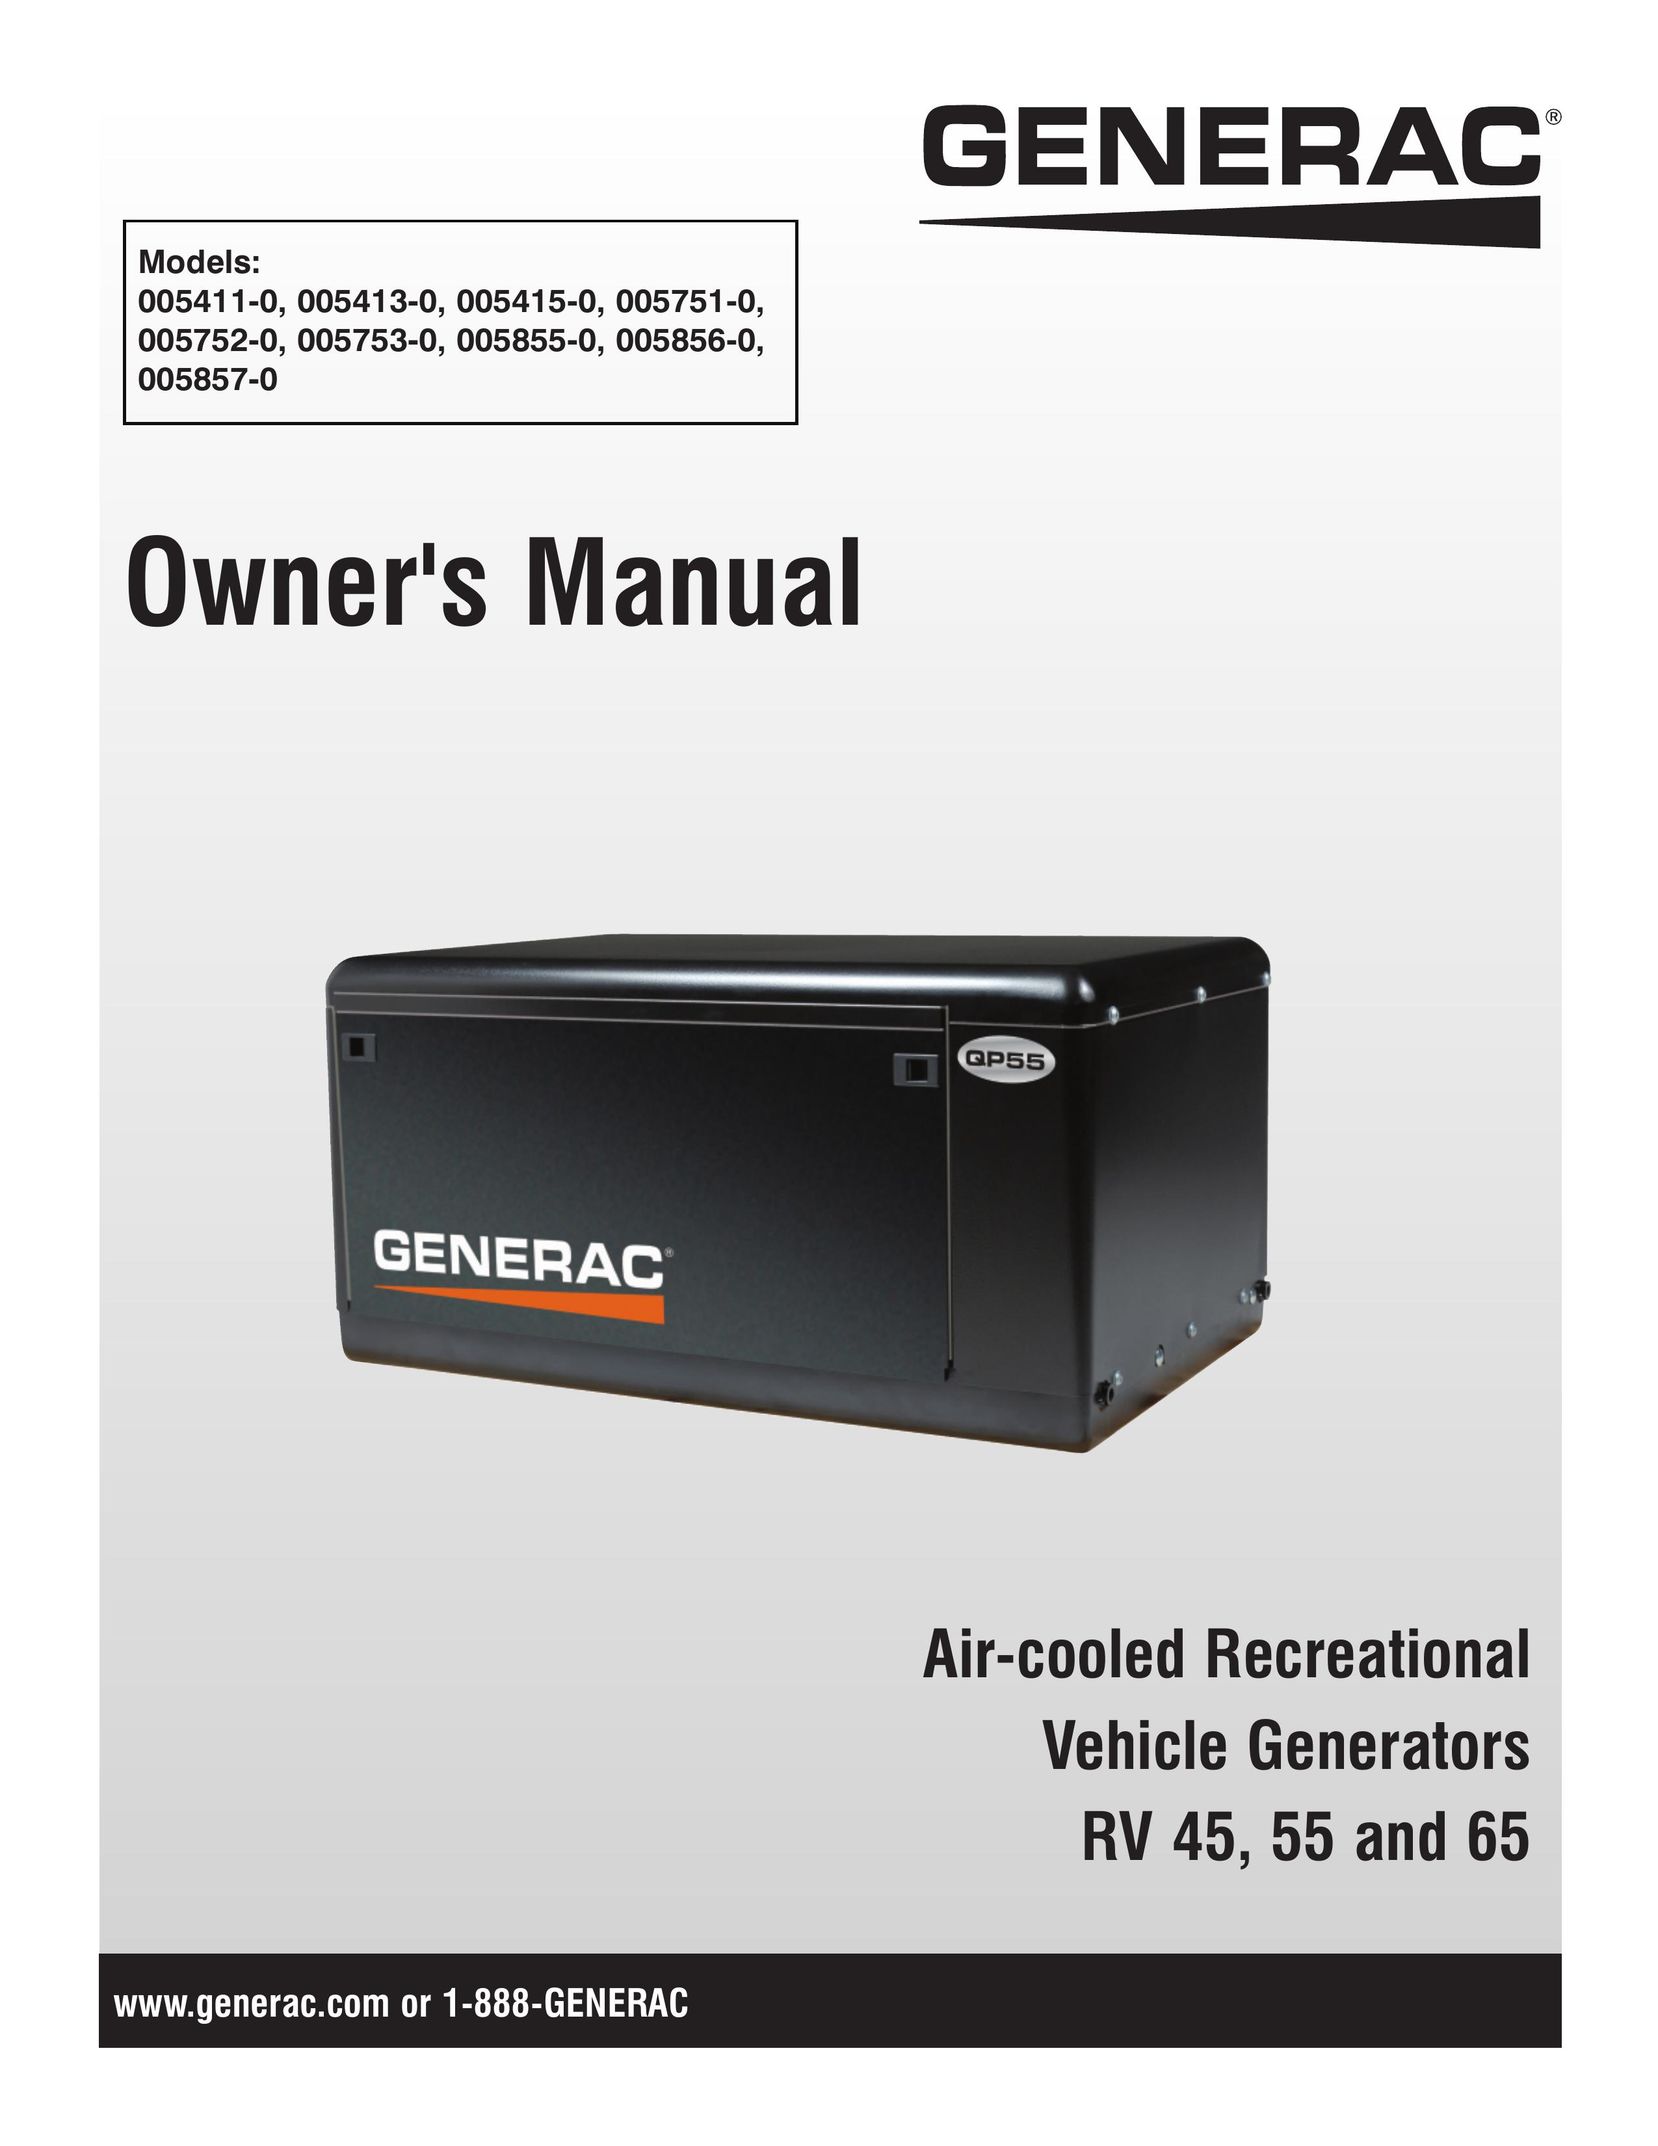 Generac 005855-0 Welding System User Manual